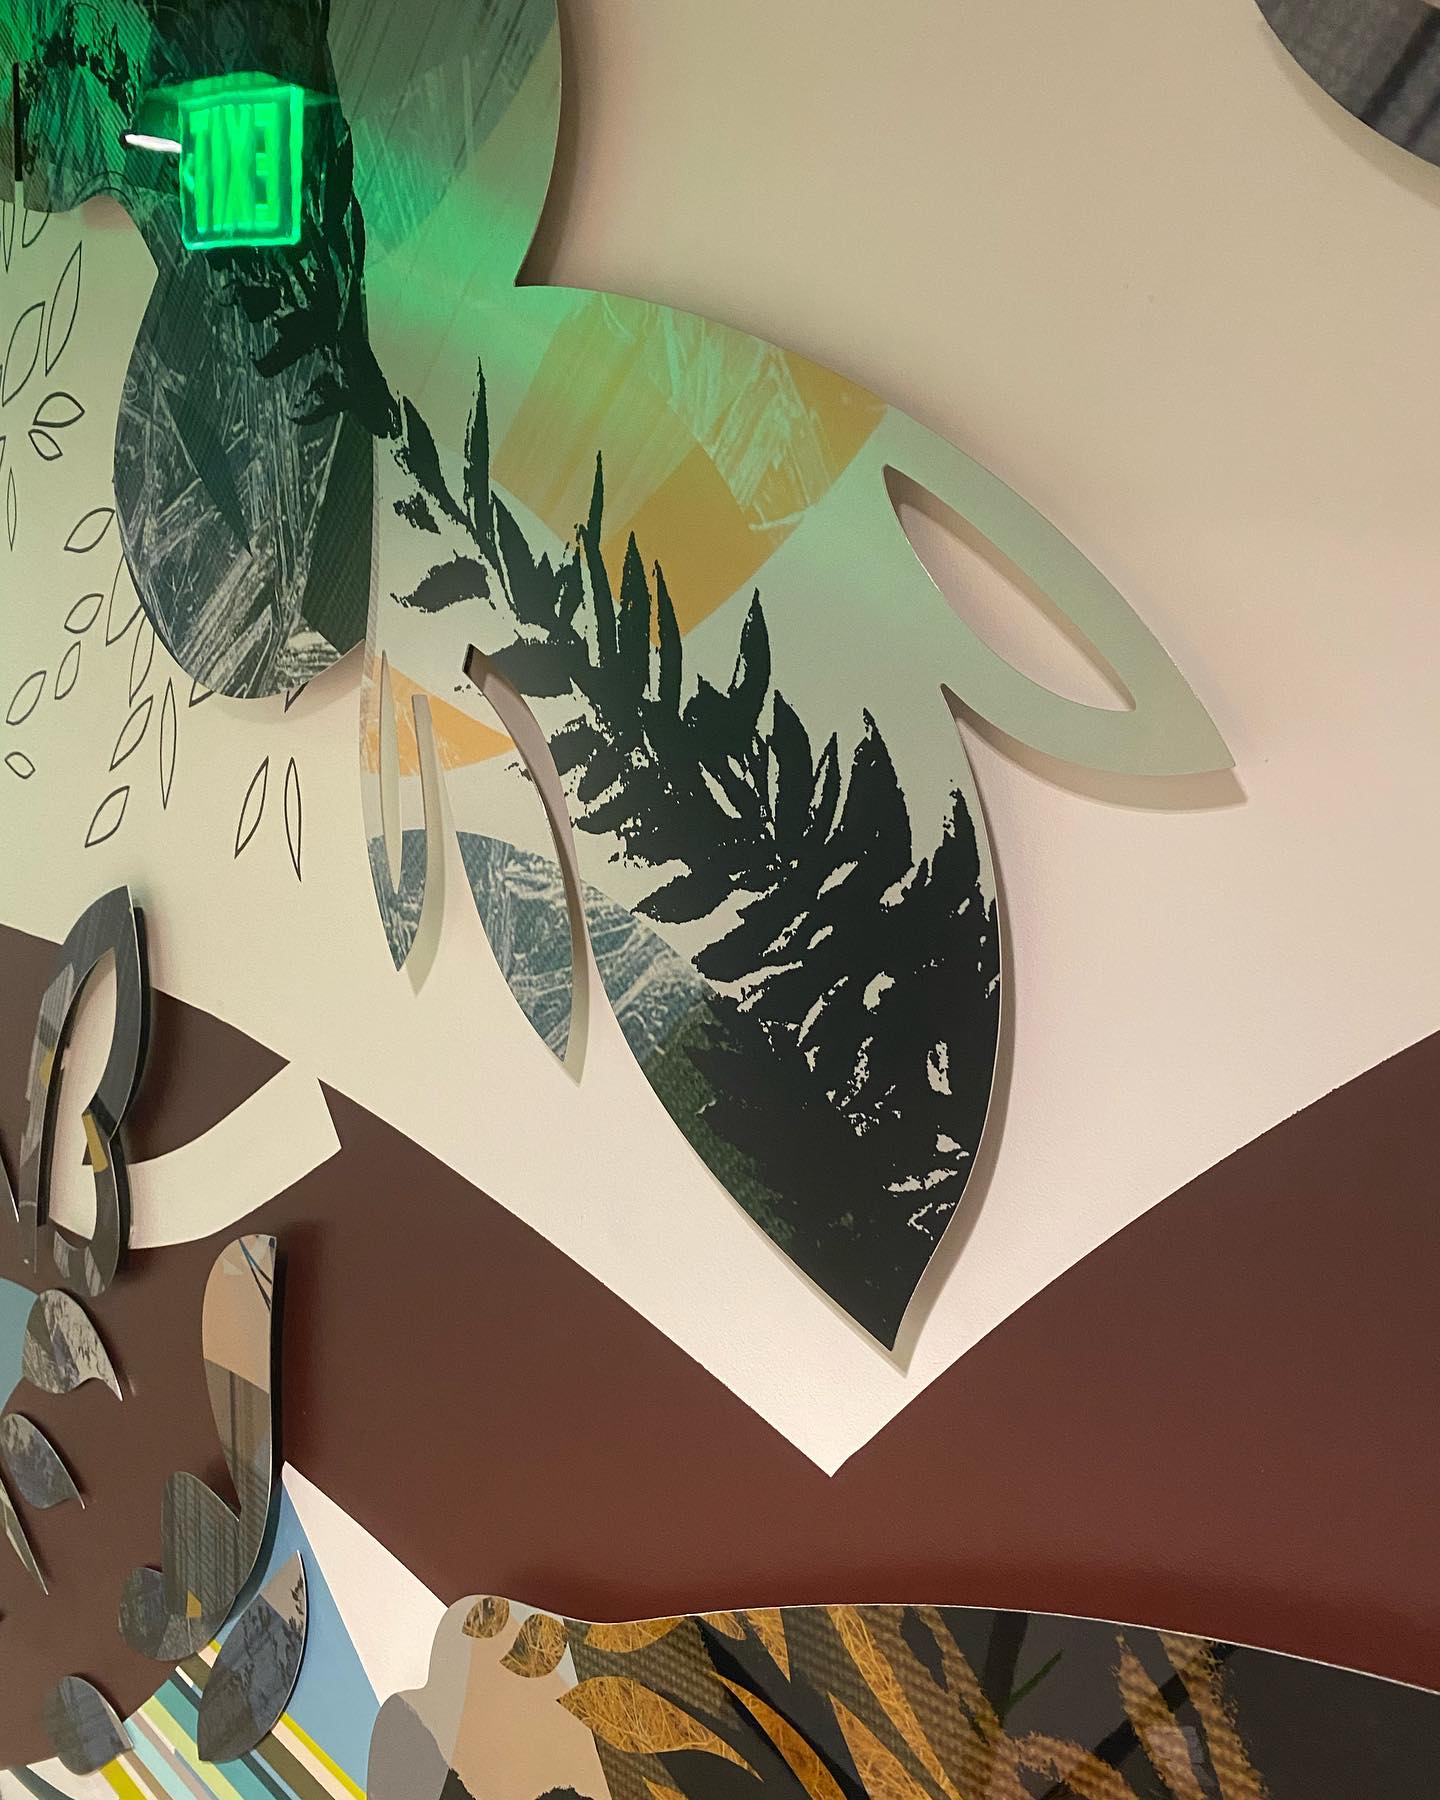 Luminous 
Amazon Denver Tech Hub, 2022

Dye-sublimated printed aluminum panels over paint

@amazon #Amazon #amazonart #amazondenver #artcommission #commission #amazondenvertechhub #mixedmedia #artinstallation #installation @walkerfineart #artistsoninstagram #installationview #installationartist #denverartist #installationartwork